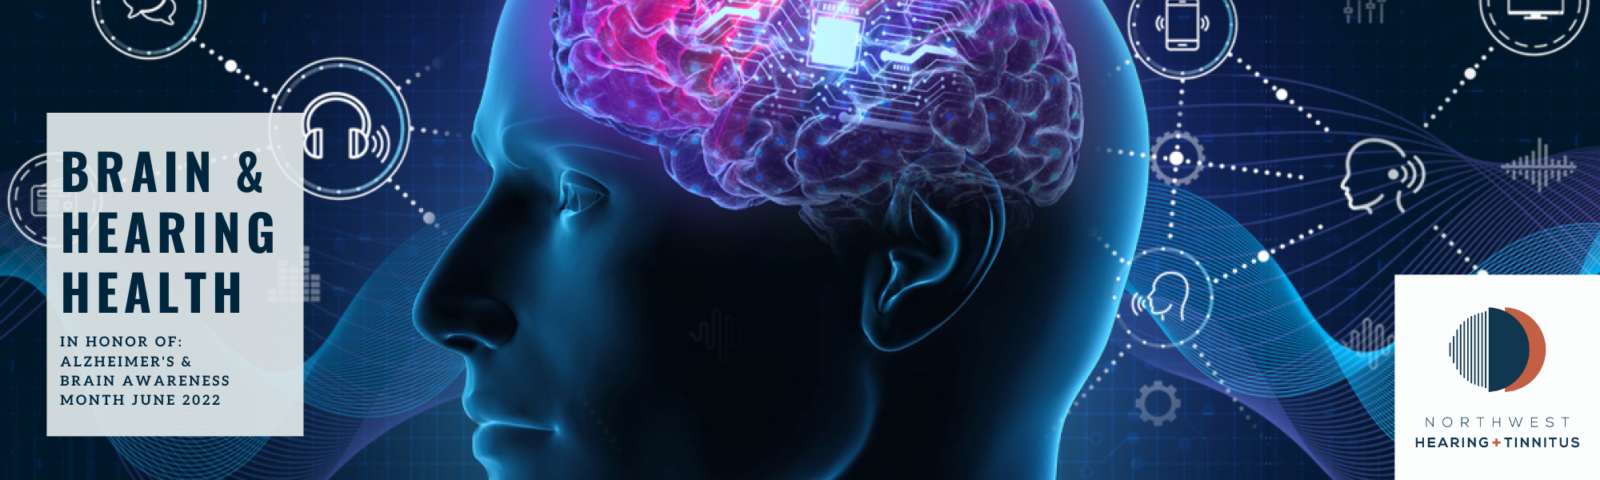 Brain + Hearing Health In honor of: alzheimer's & brain awareness month June 2022 Blue and purple brain map photo 